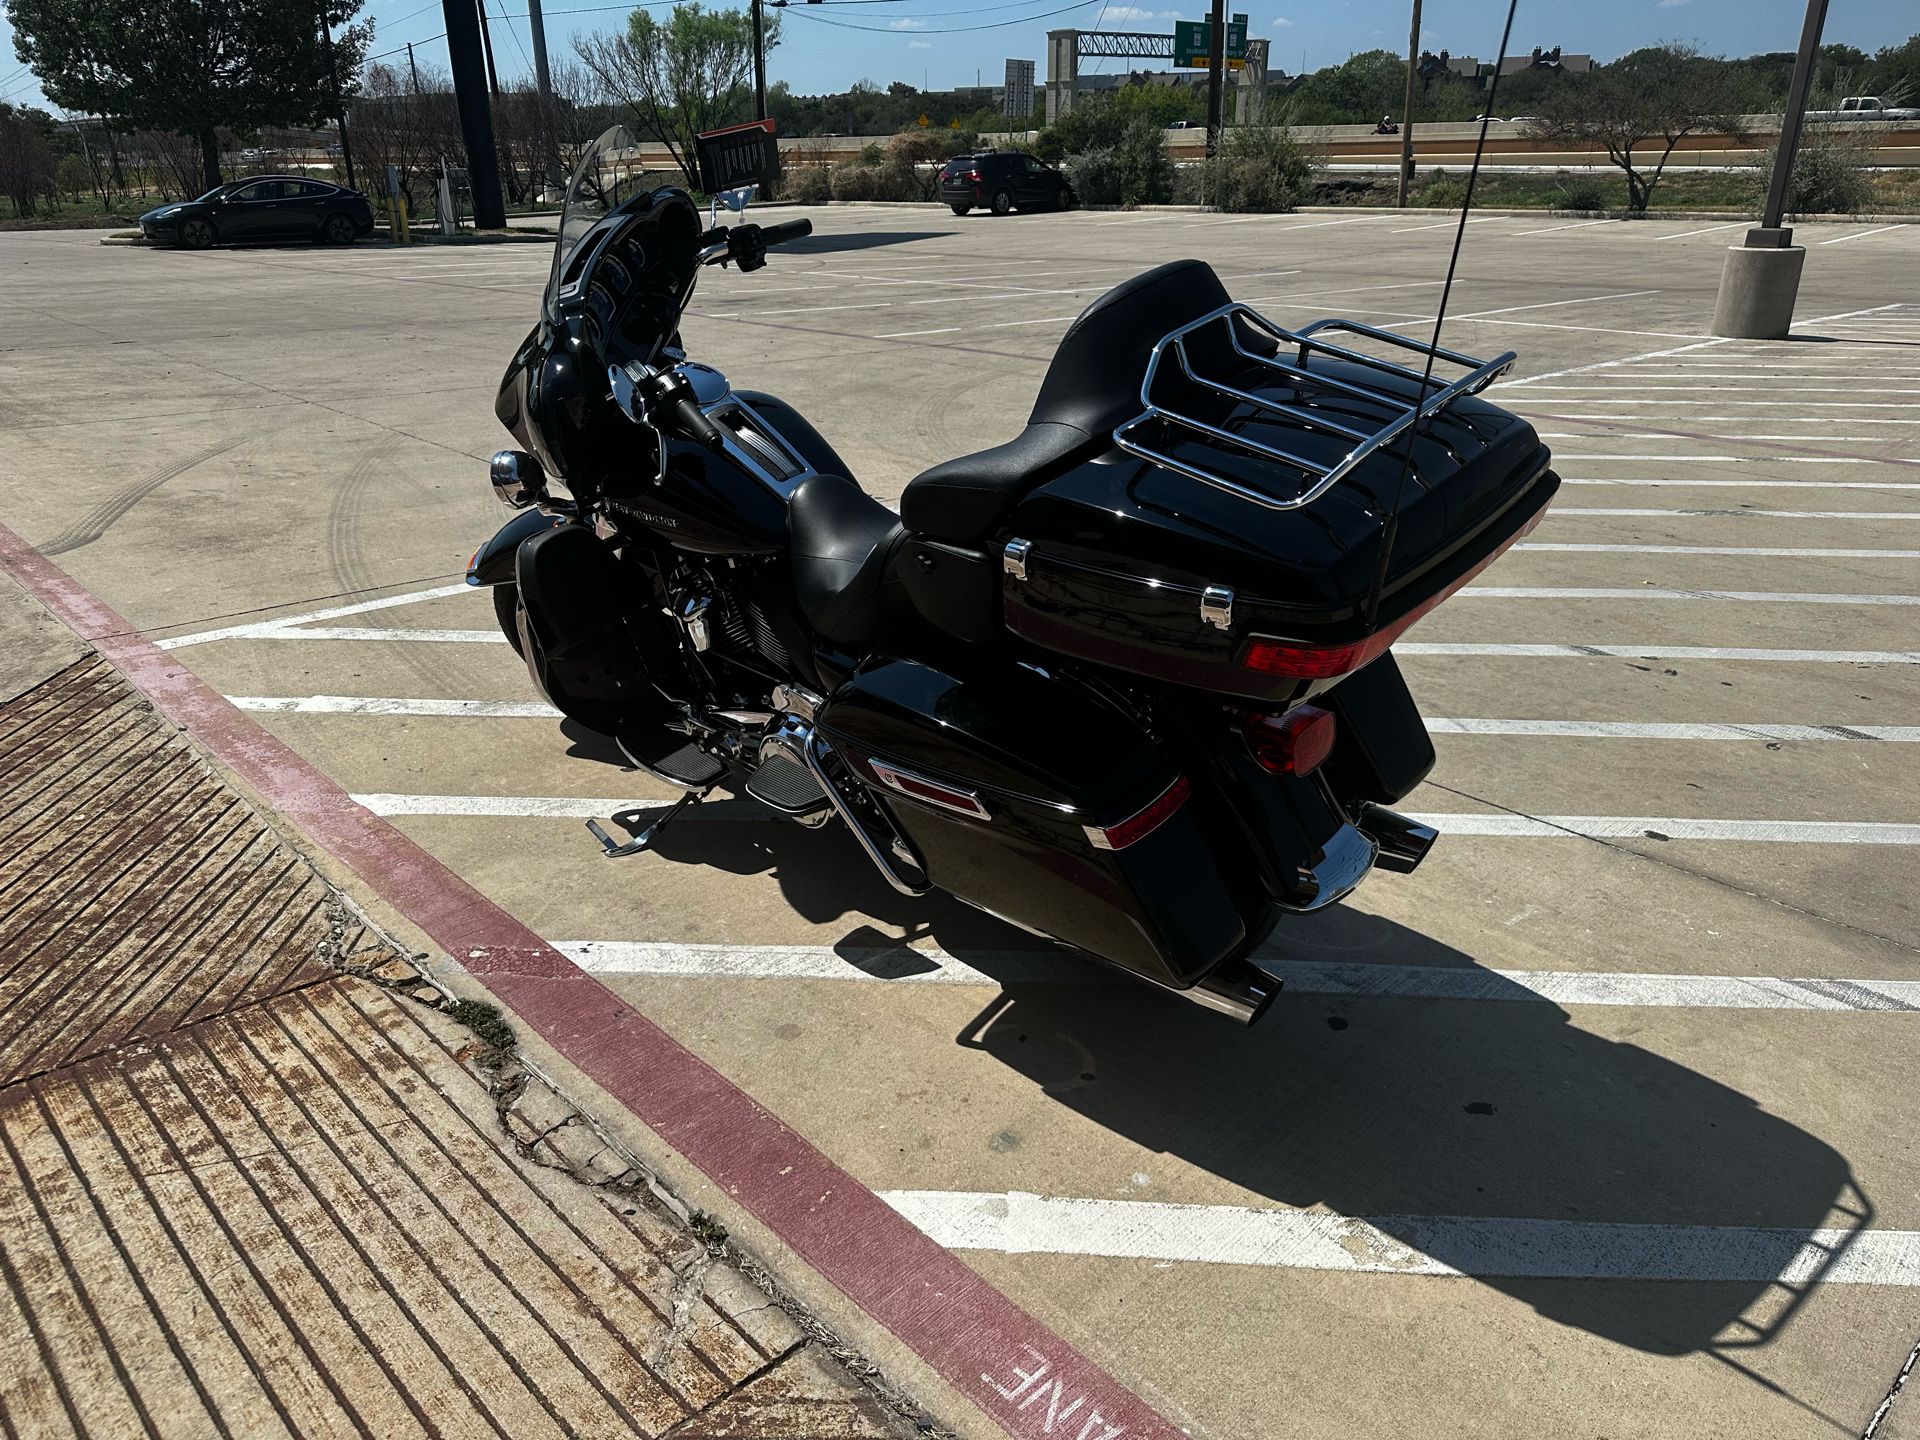 2018 Harley-Davidson Ultra Limited in San Antonio, Texas - Photo 6